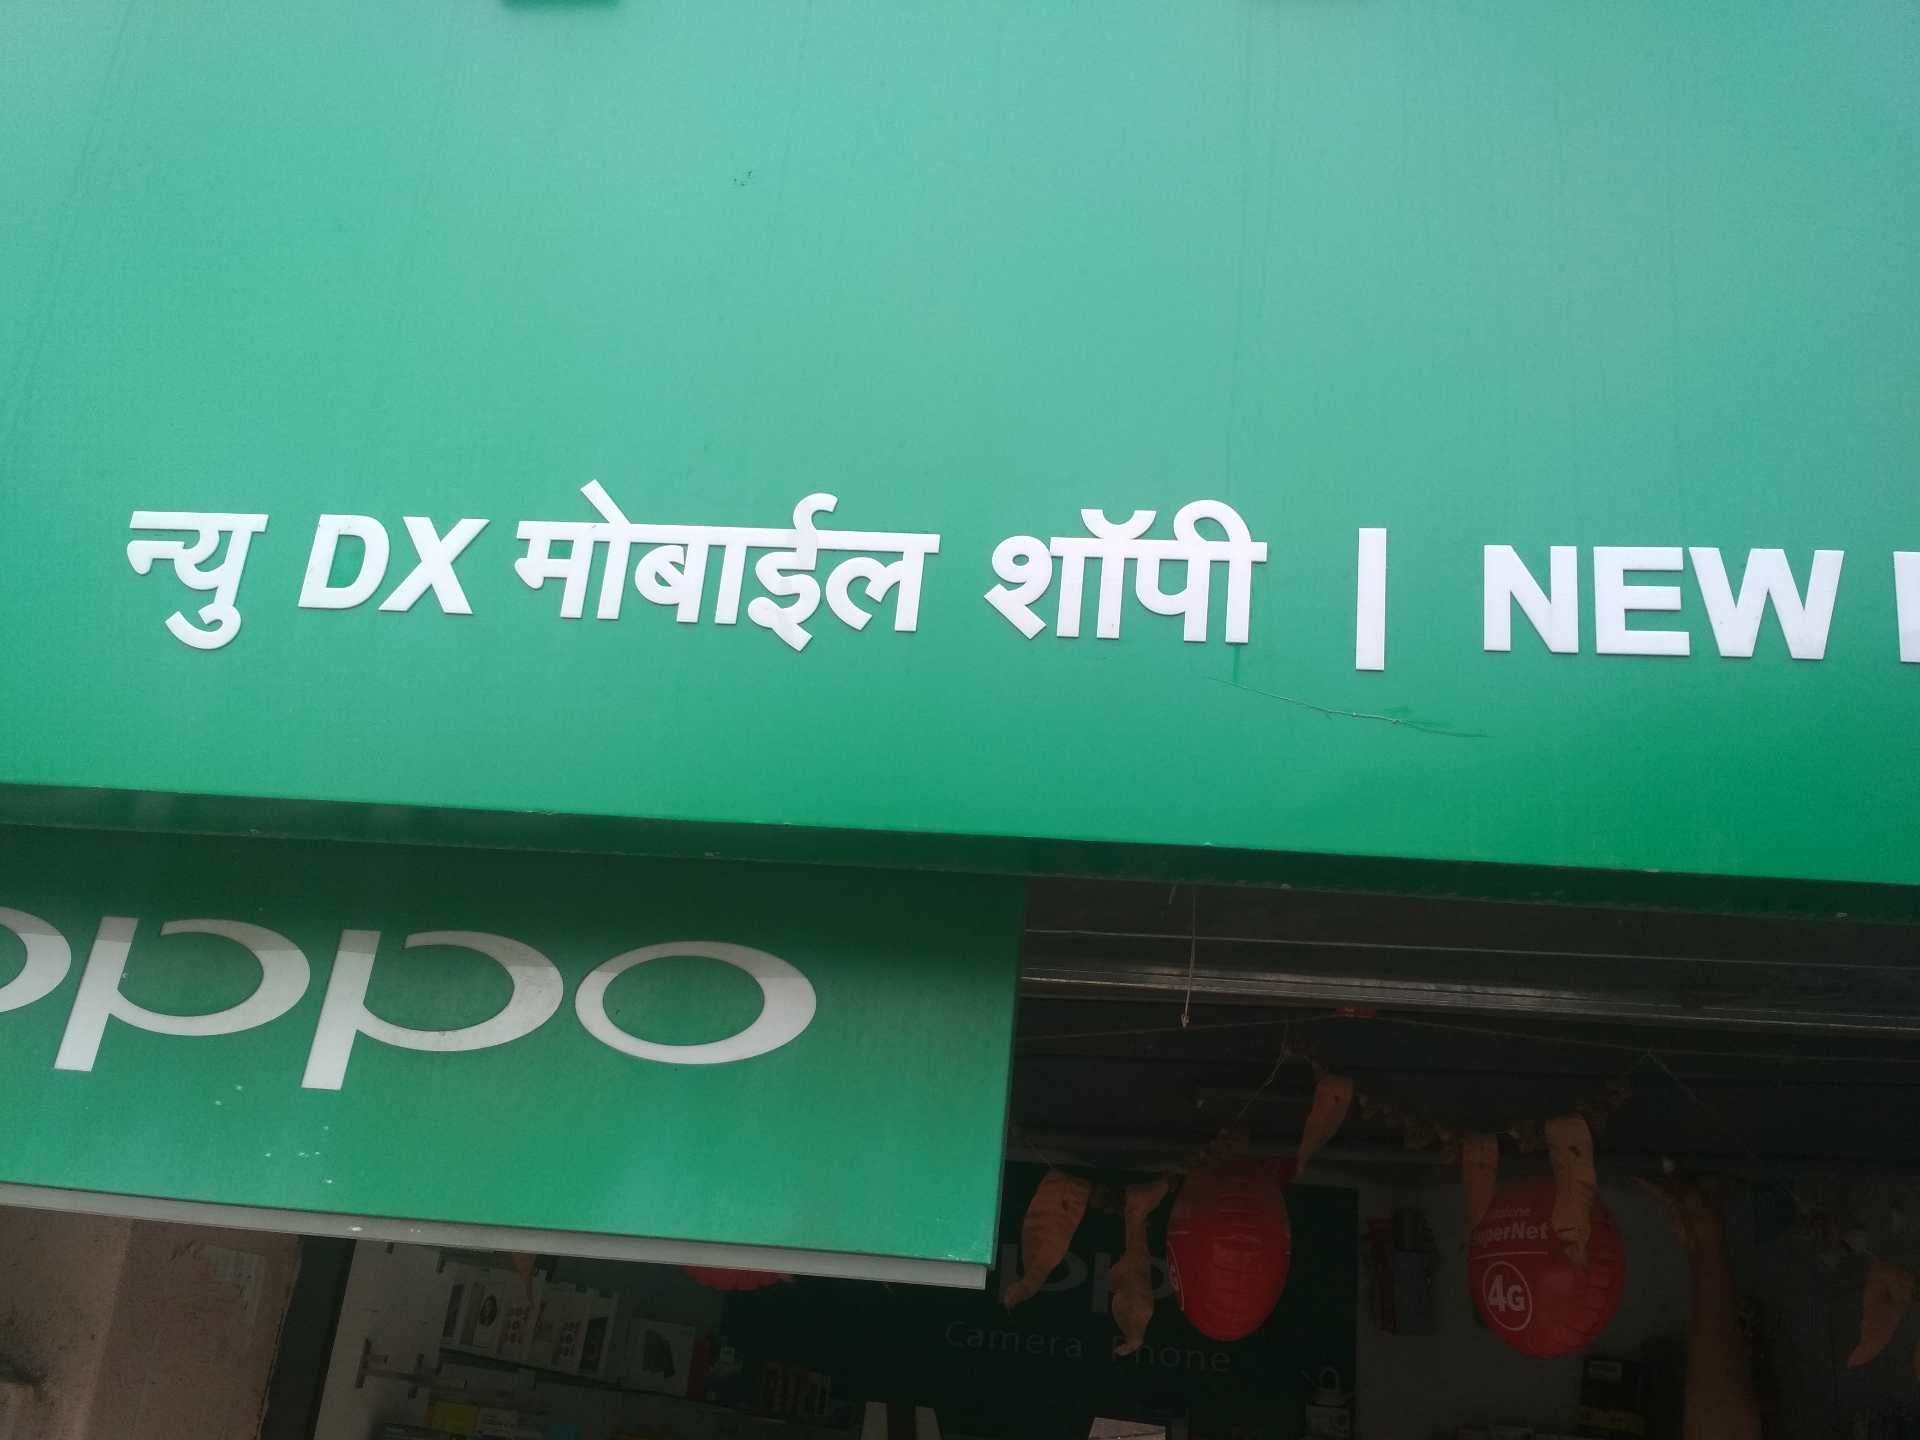 1920x1440 ... New Dx Mobile Photos, Ambapeth, Amravati - Mobile Phone Repair &  Services ...